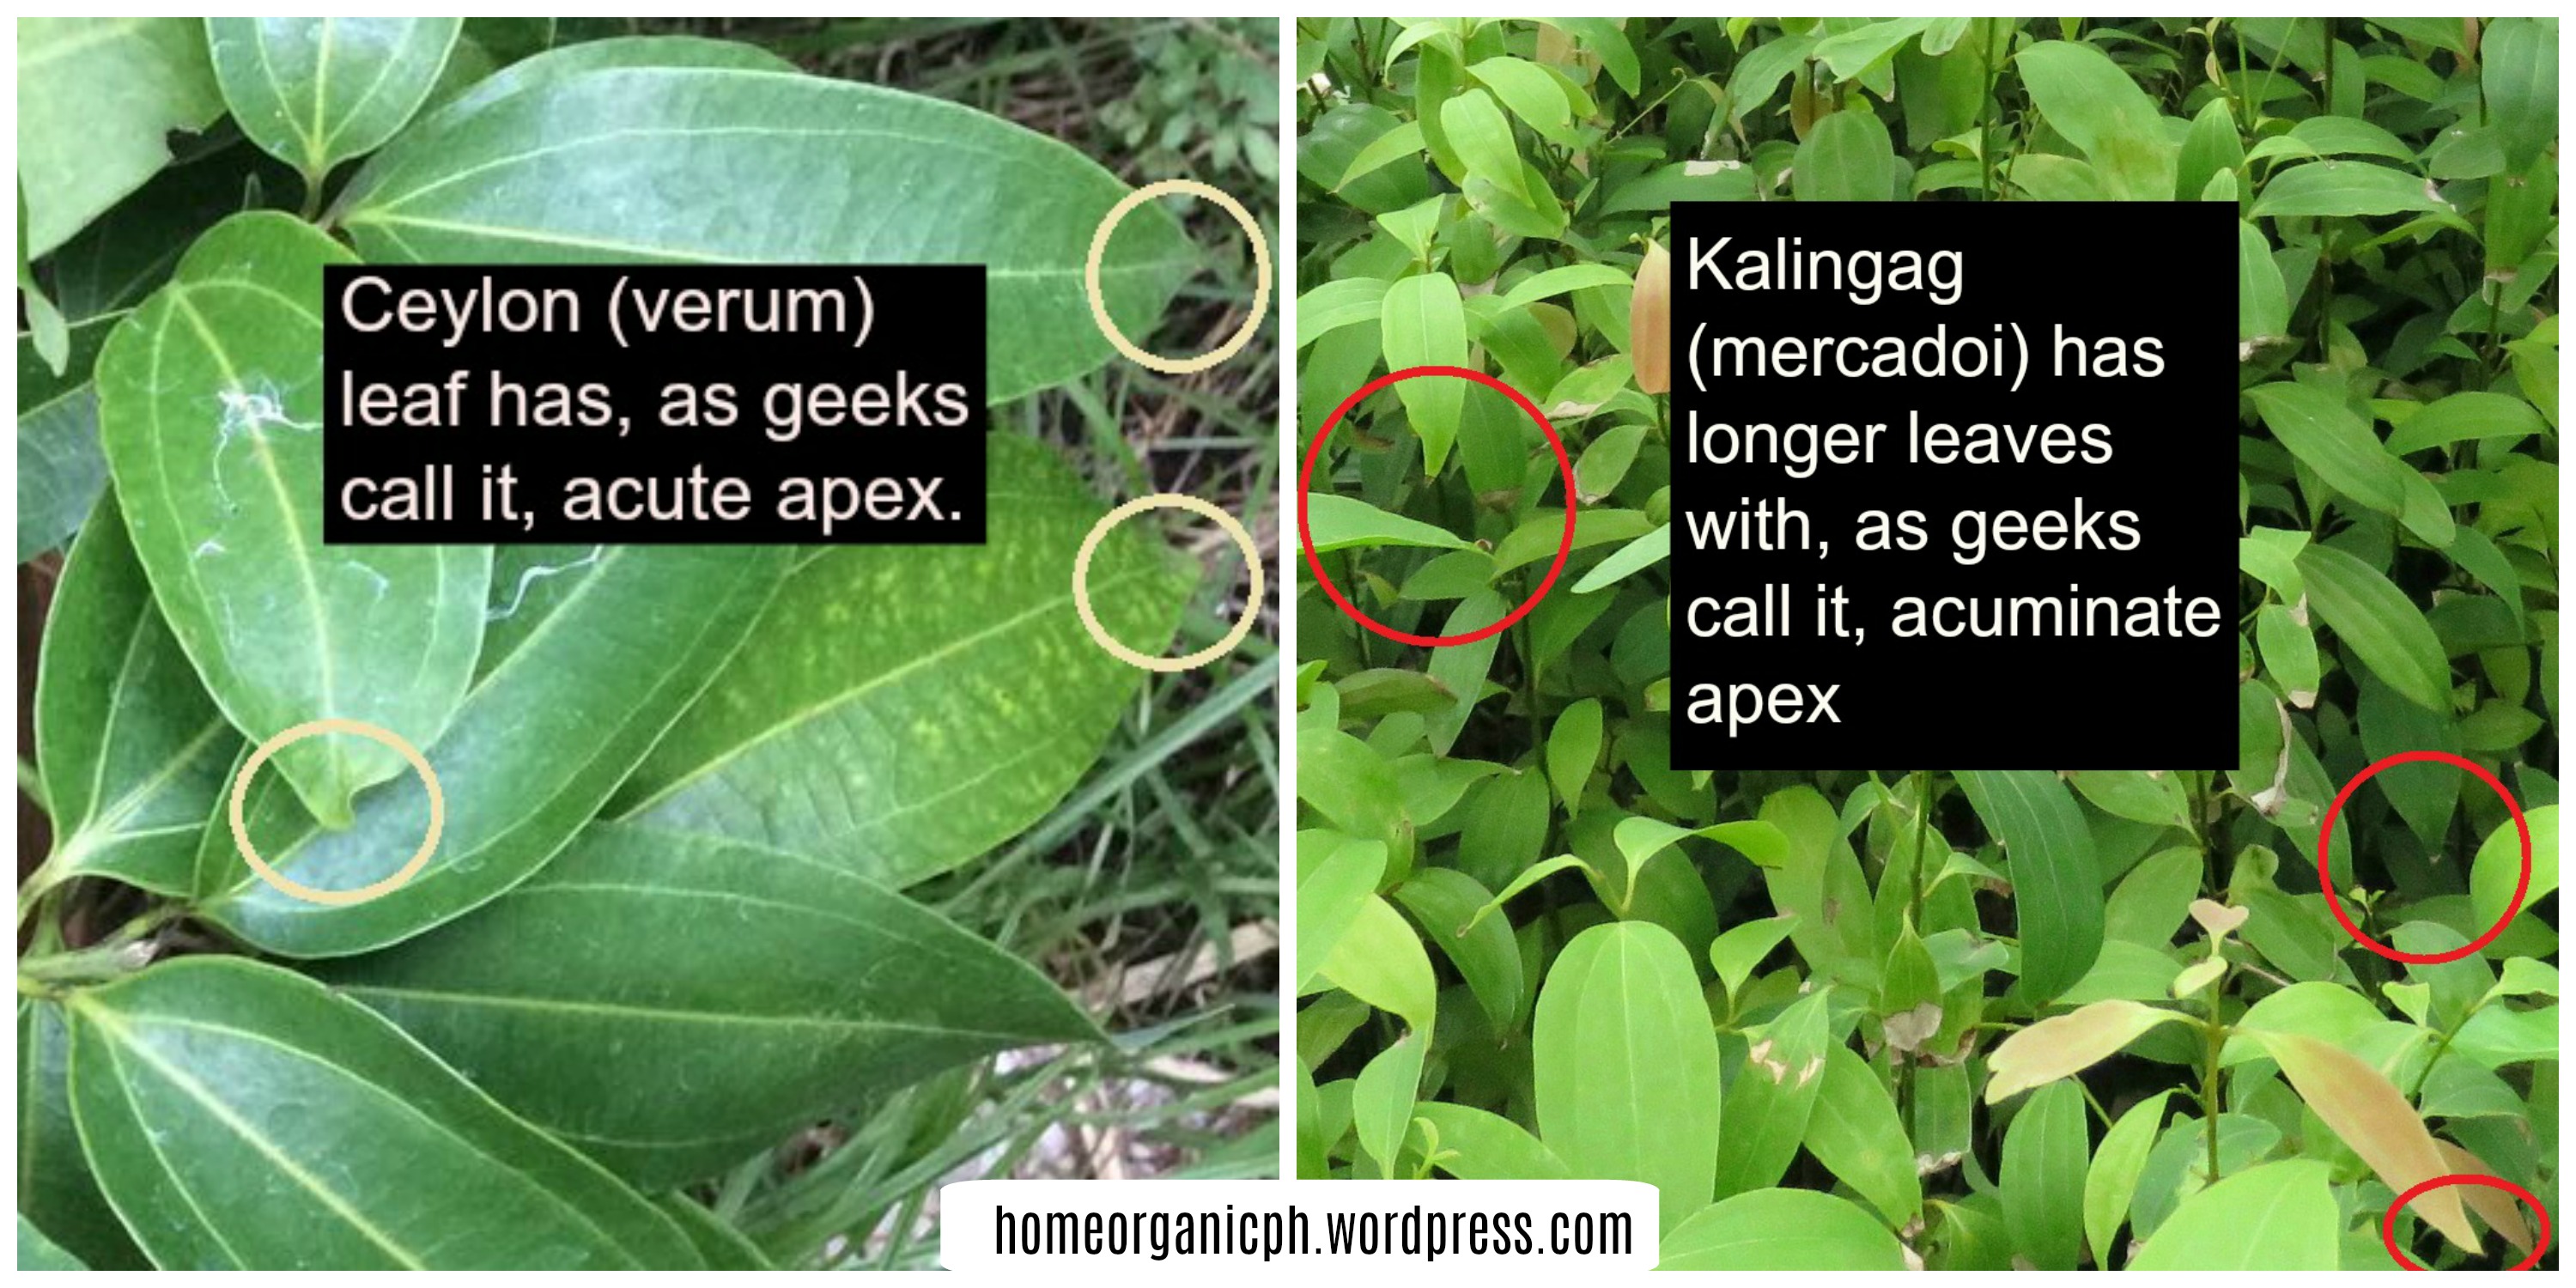 One difference on leaves of Cinnamons verum (Ceylon) and mercadoi (Kalingag)